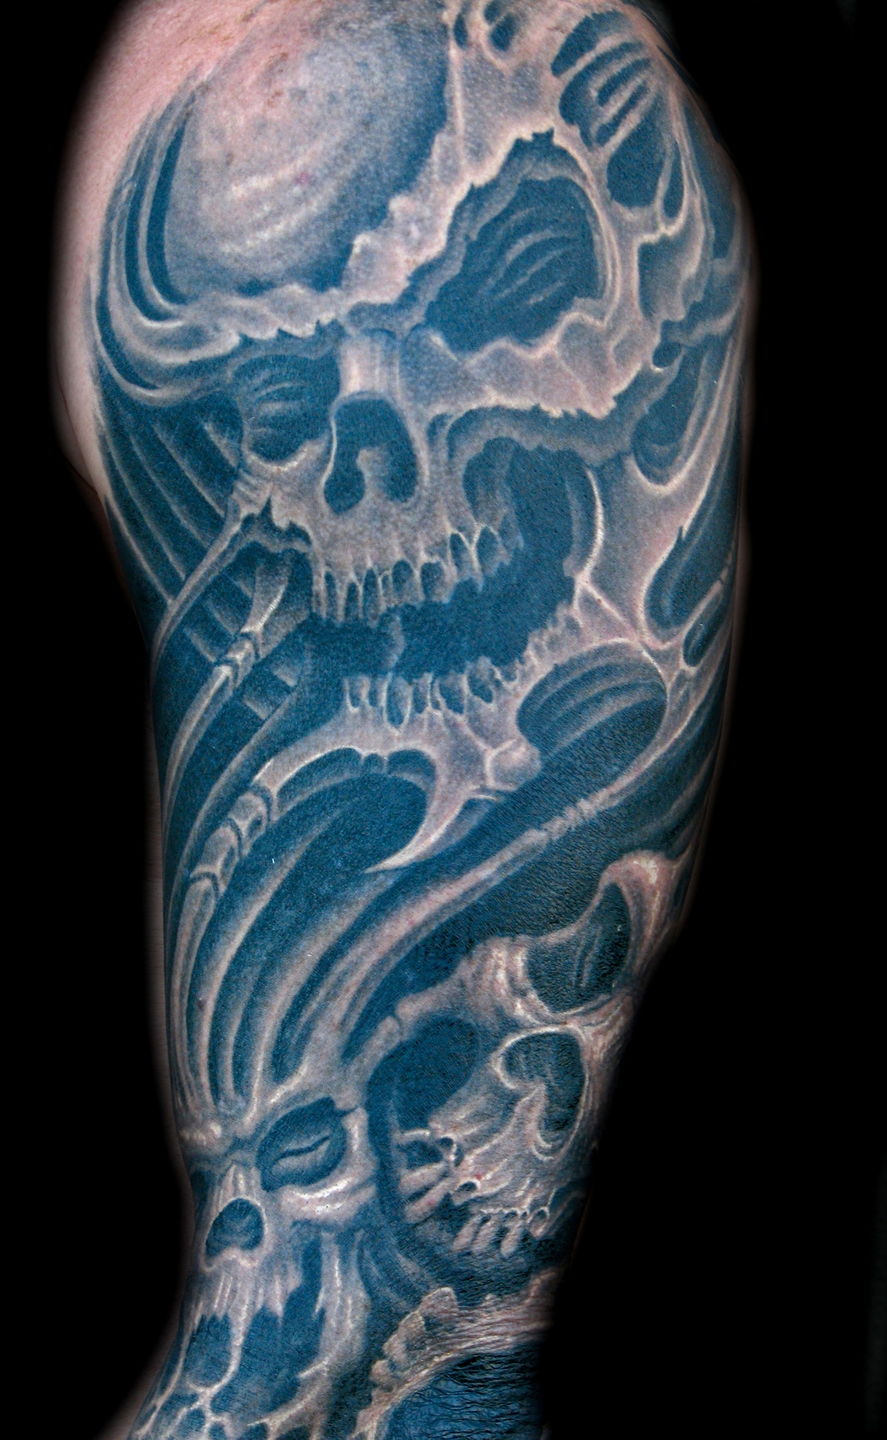 Las-vegas-tattoo-artist_joe-riley_black-and-grey-biomechanical-skull-tattoo